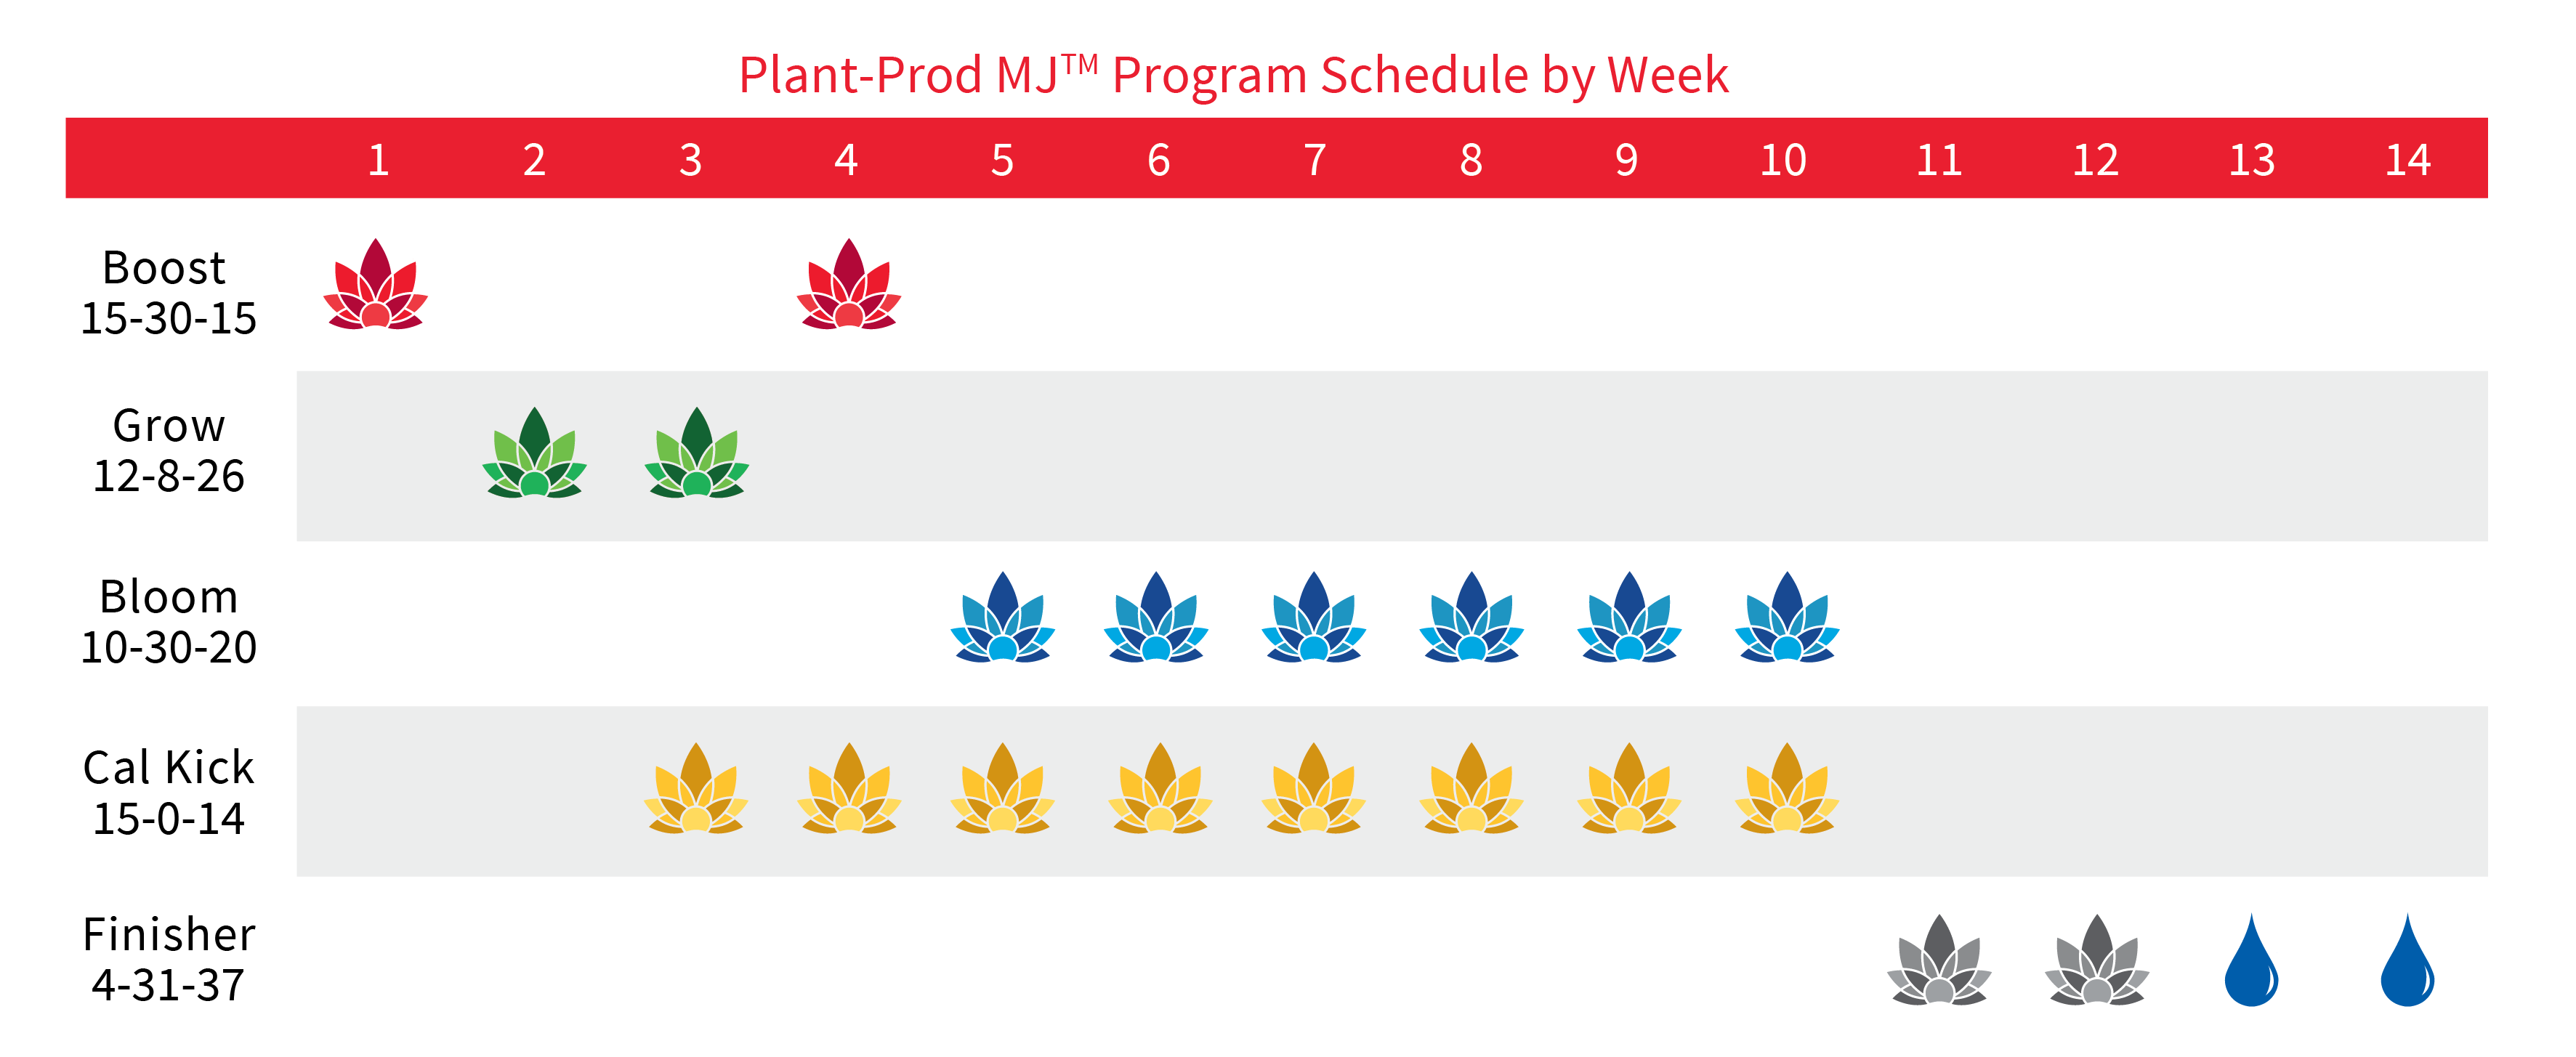 Plant-Prod MJ cannabis fertilizer program schedule by week